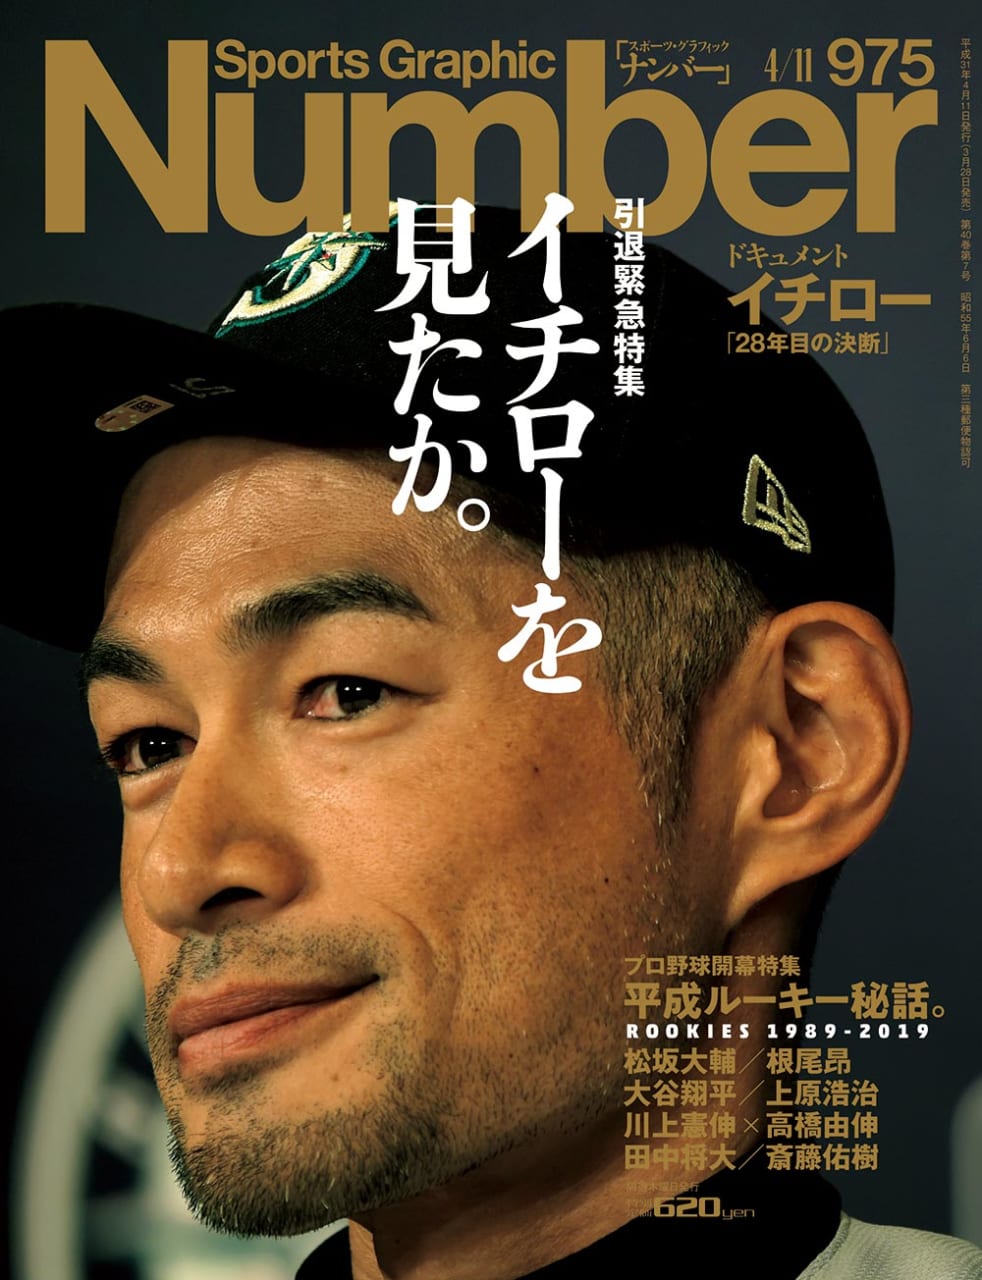 Sports Graphic Number 975号
2019年3月28日発売
表紙撮影：佐貫直哉